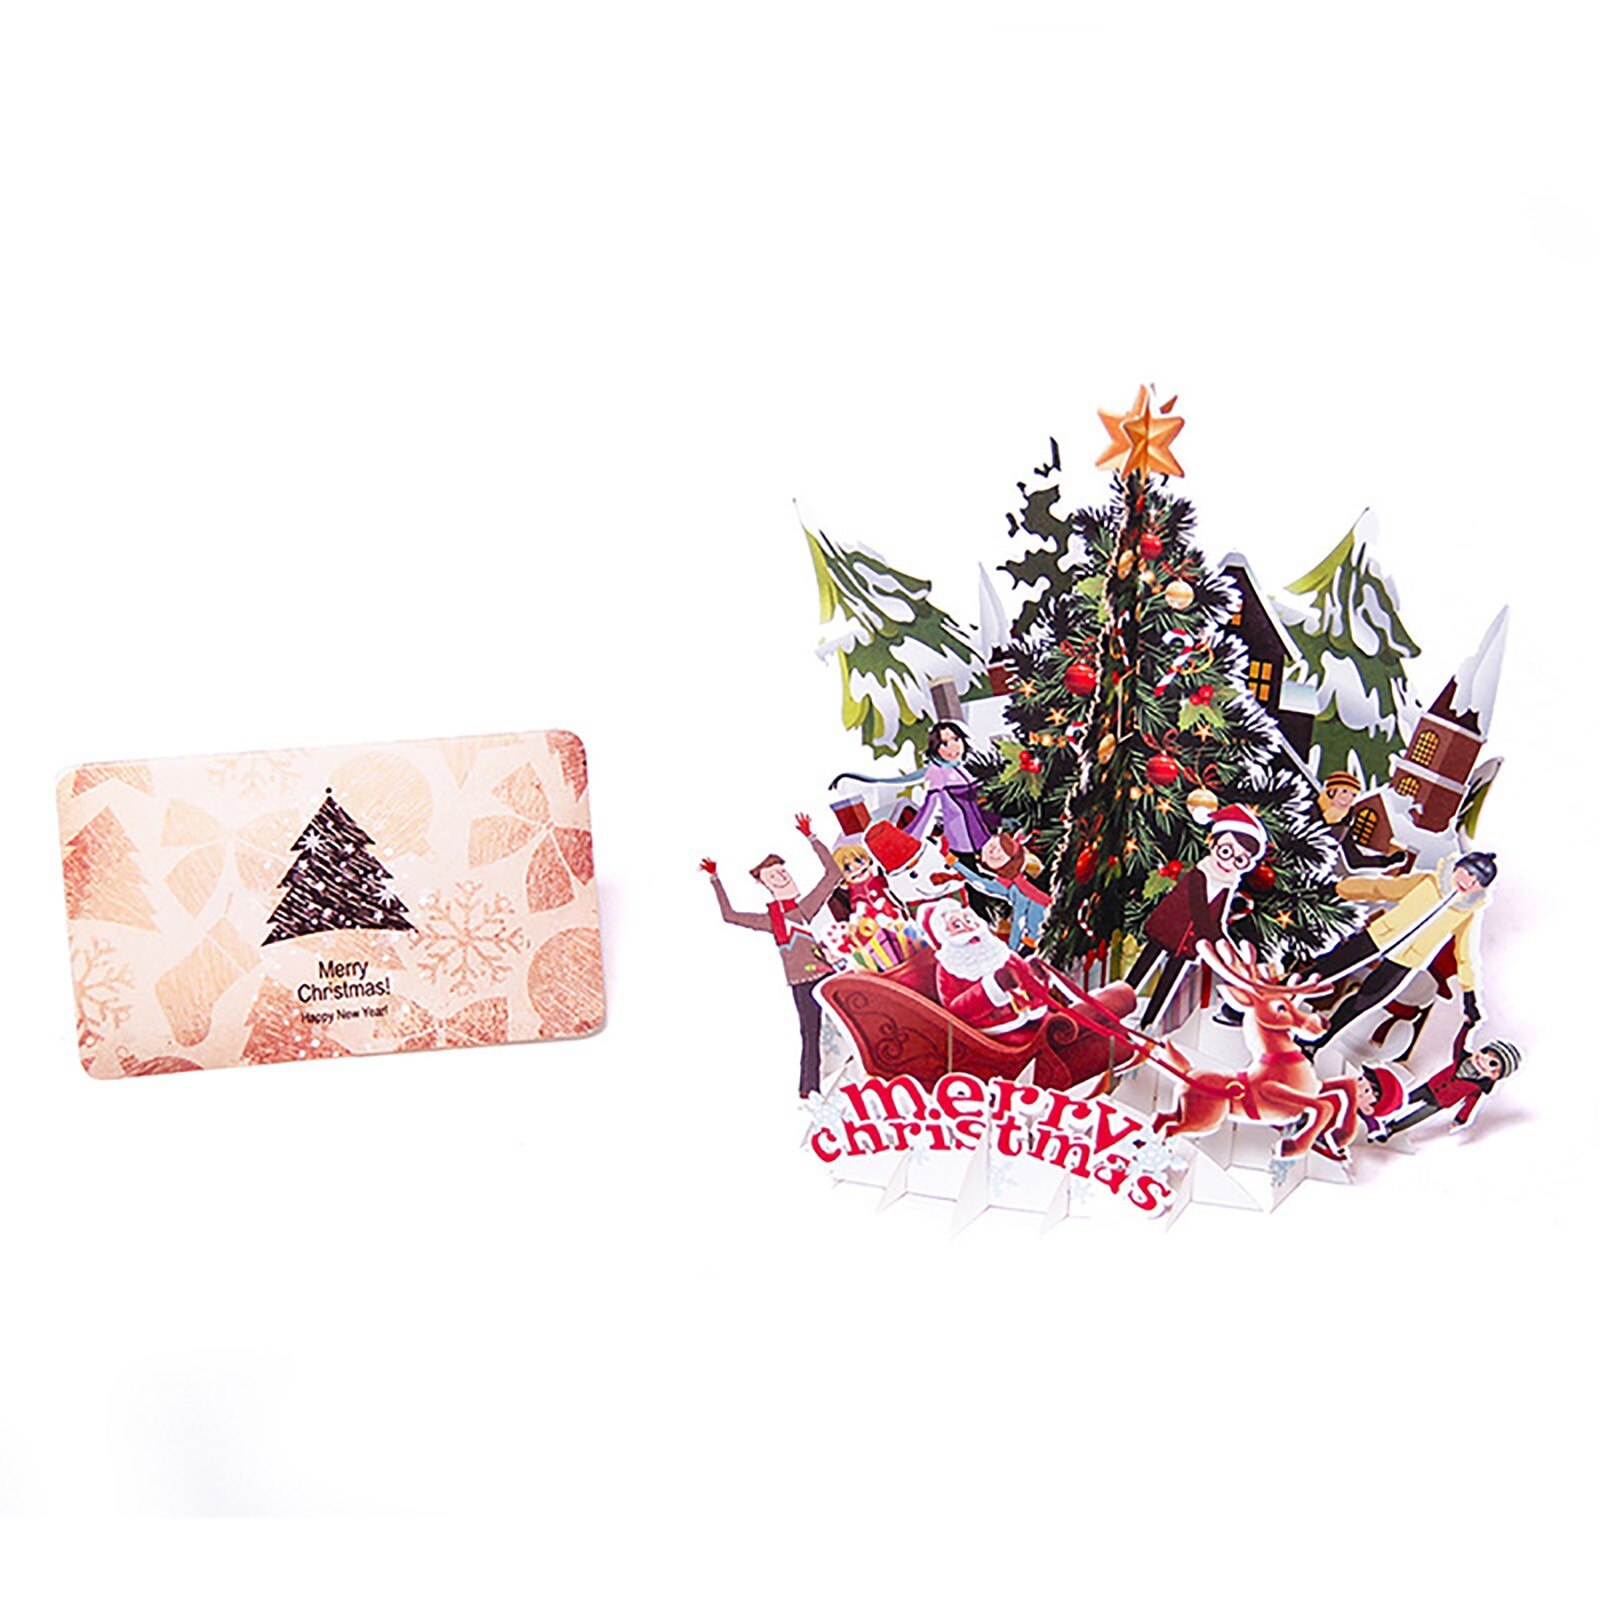 Jul lykønskningskort tredimensionelt 3d håndlavet kort takkort: E